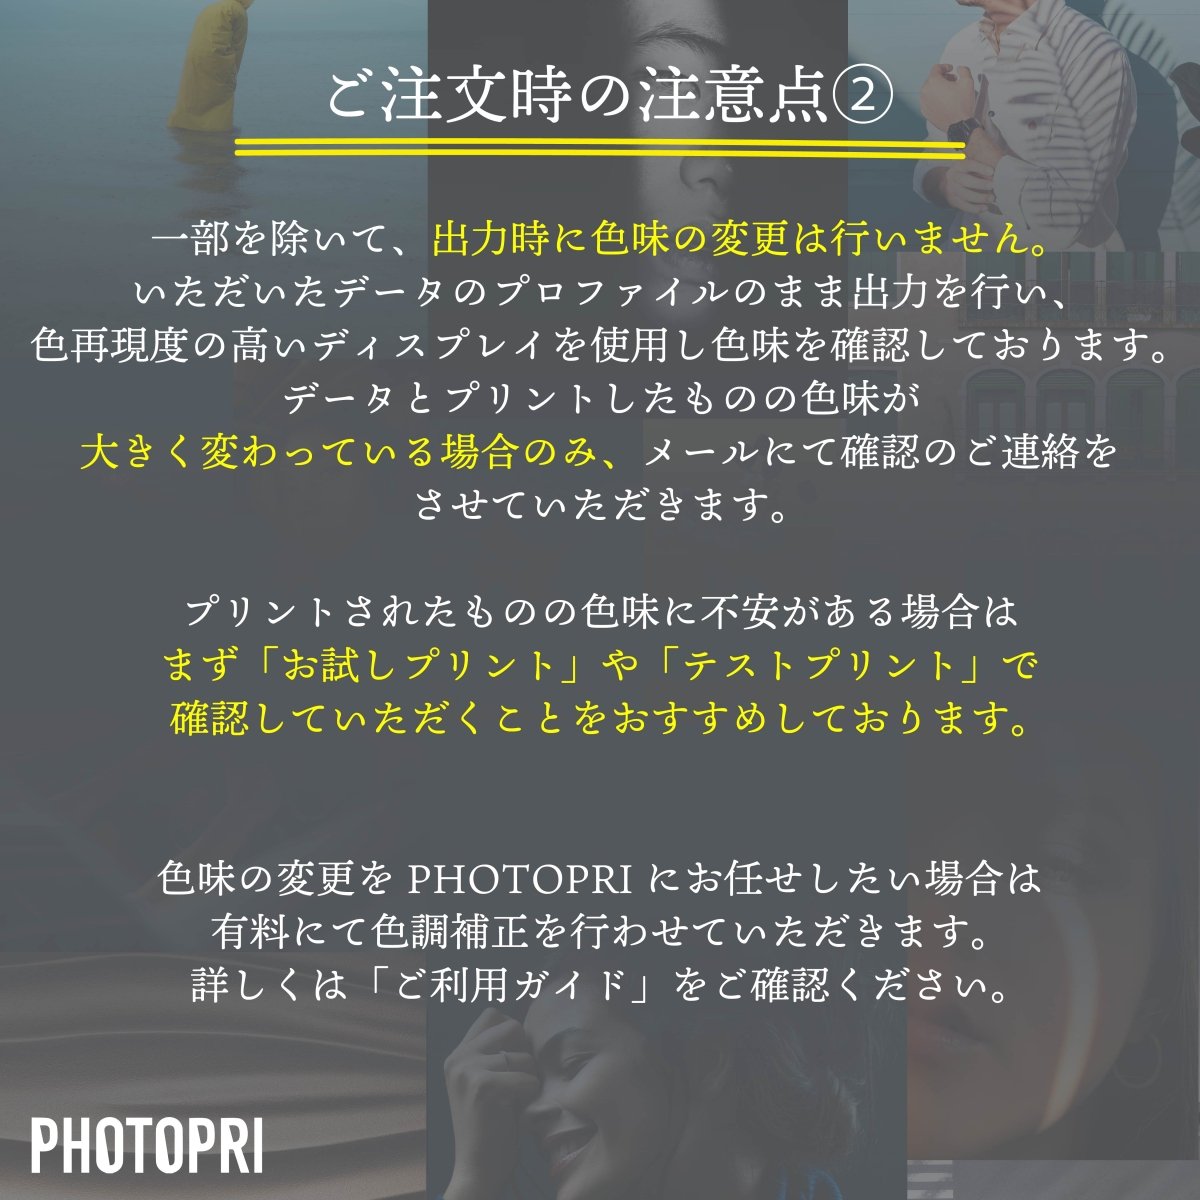 EPSON】プロフェッショナルフォトペーパー厚手絹目 │ PHOTOPRI【